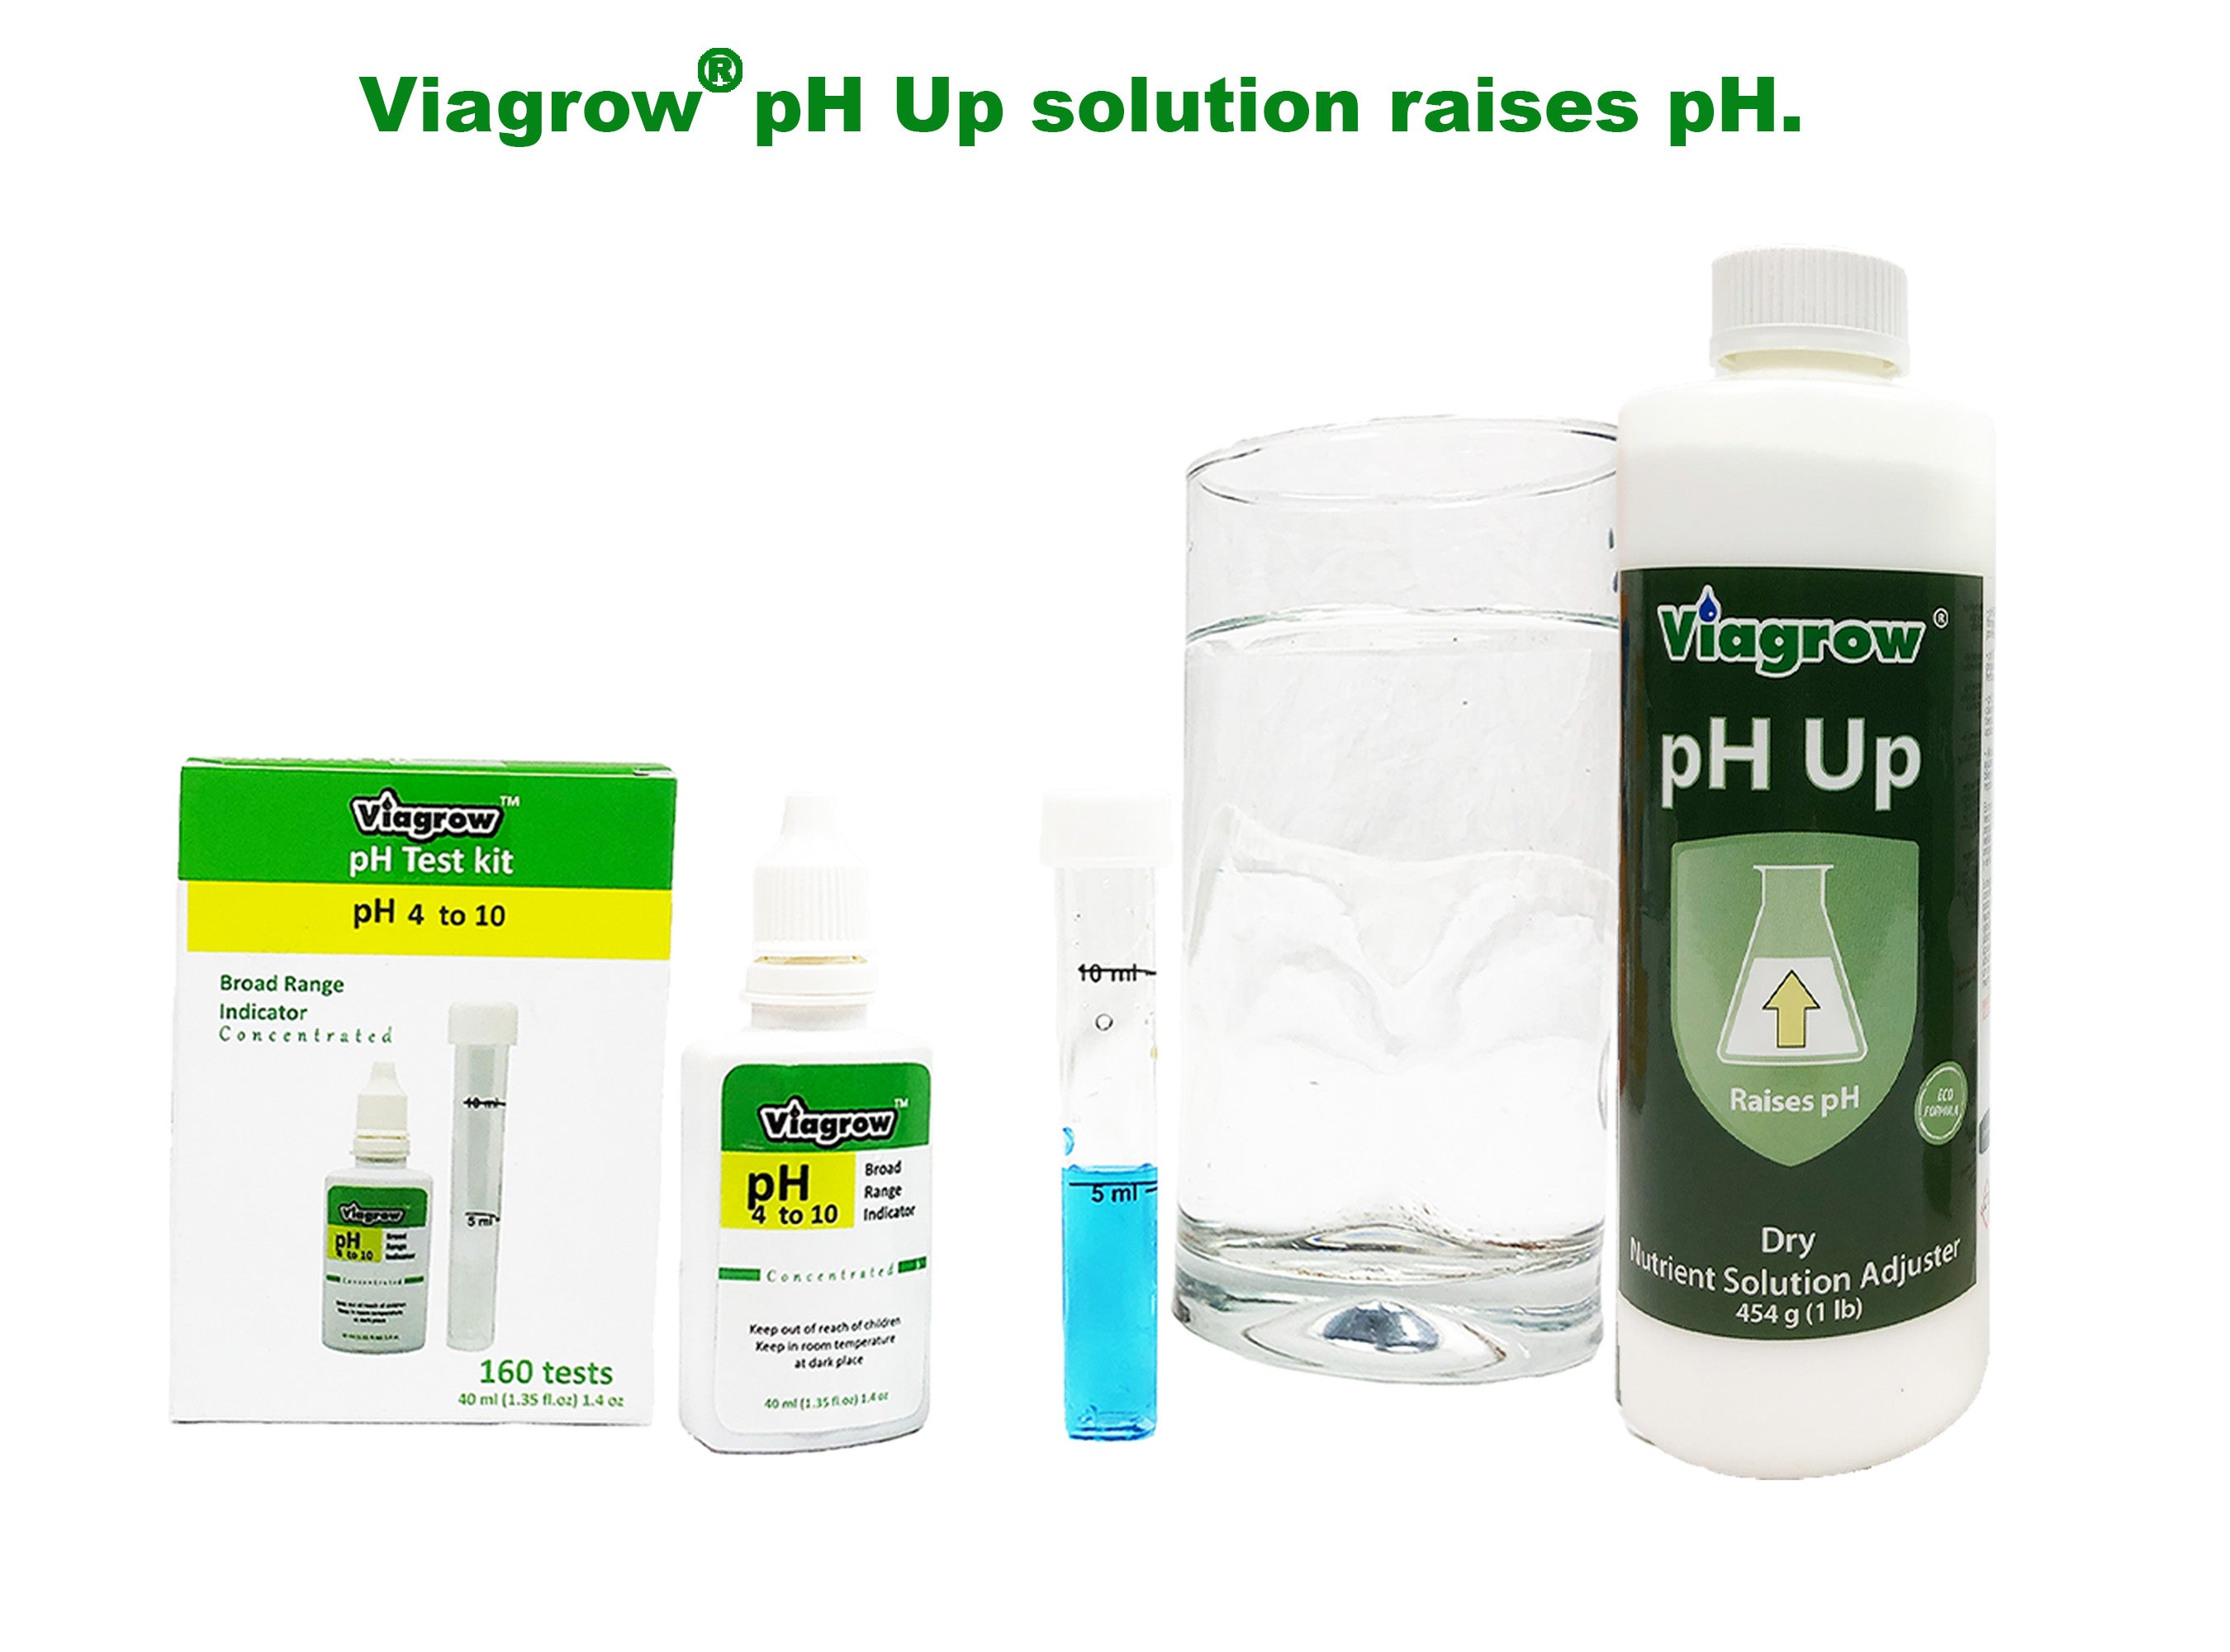 Viagrow Natural pH Up Adjusting Crystals, 1 Lbs, Green, (Case of 48)